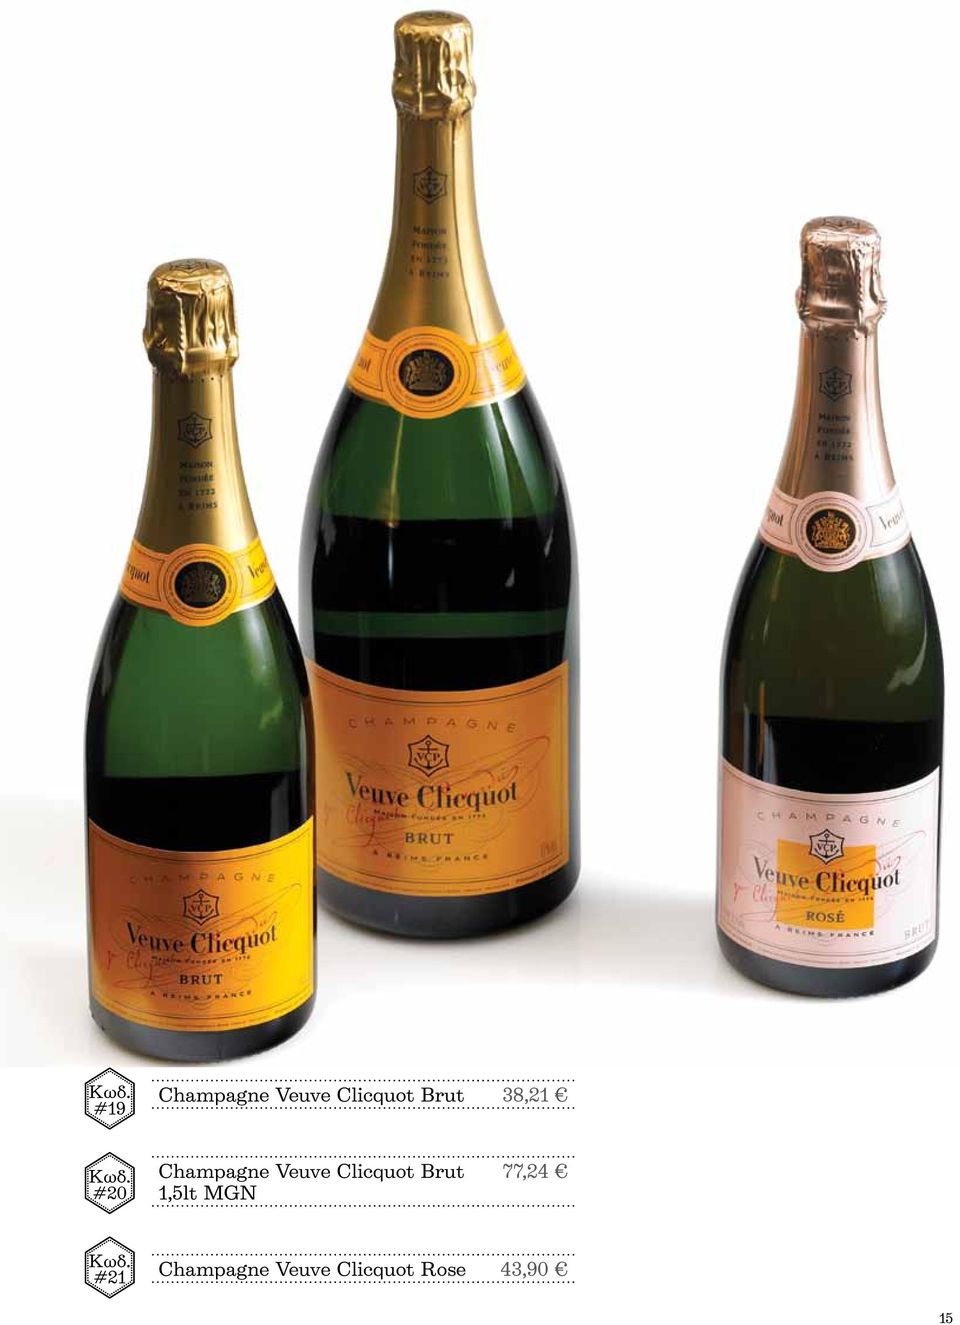 #20 Champagne Veuve Clicquot Brut